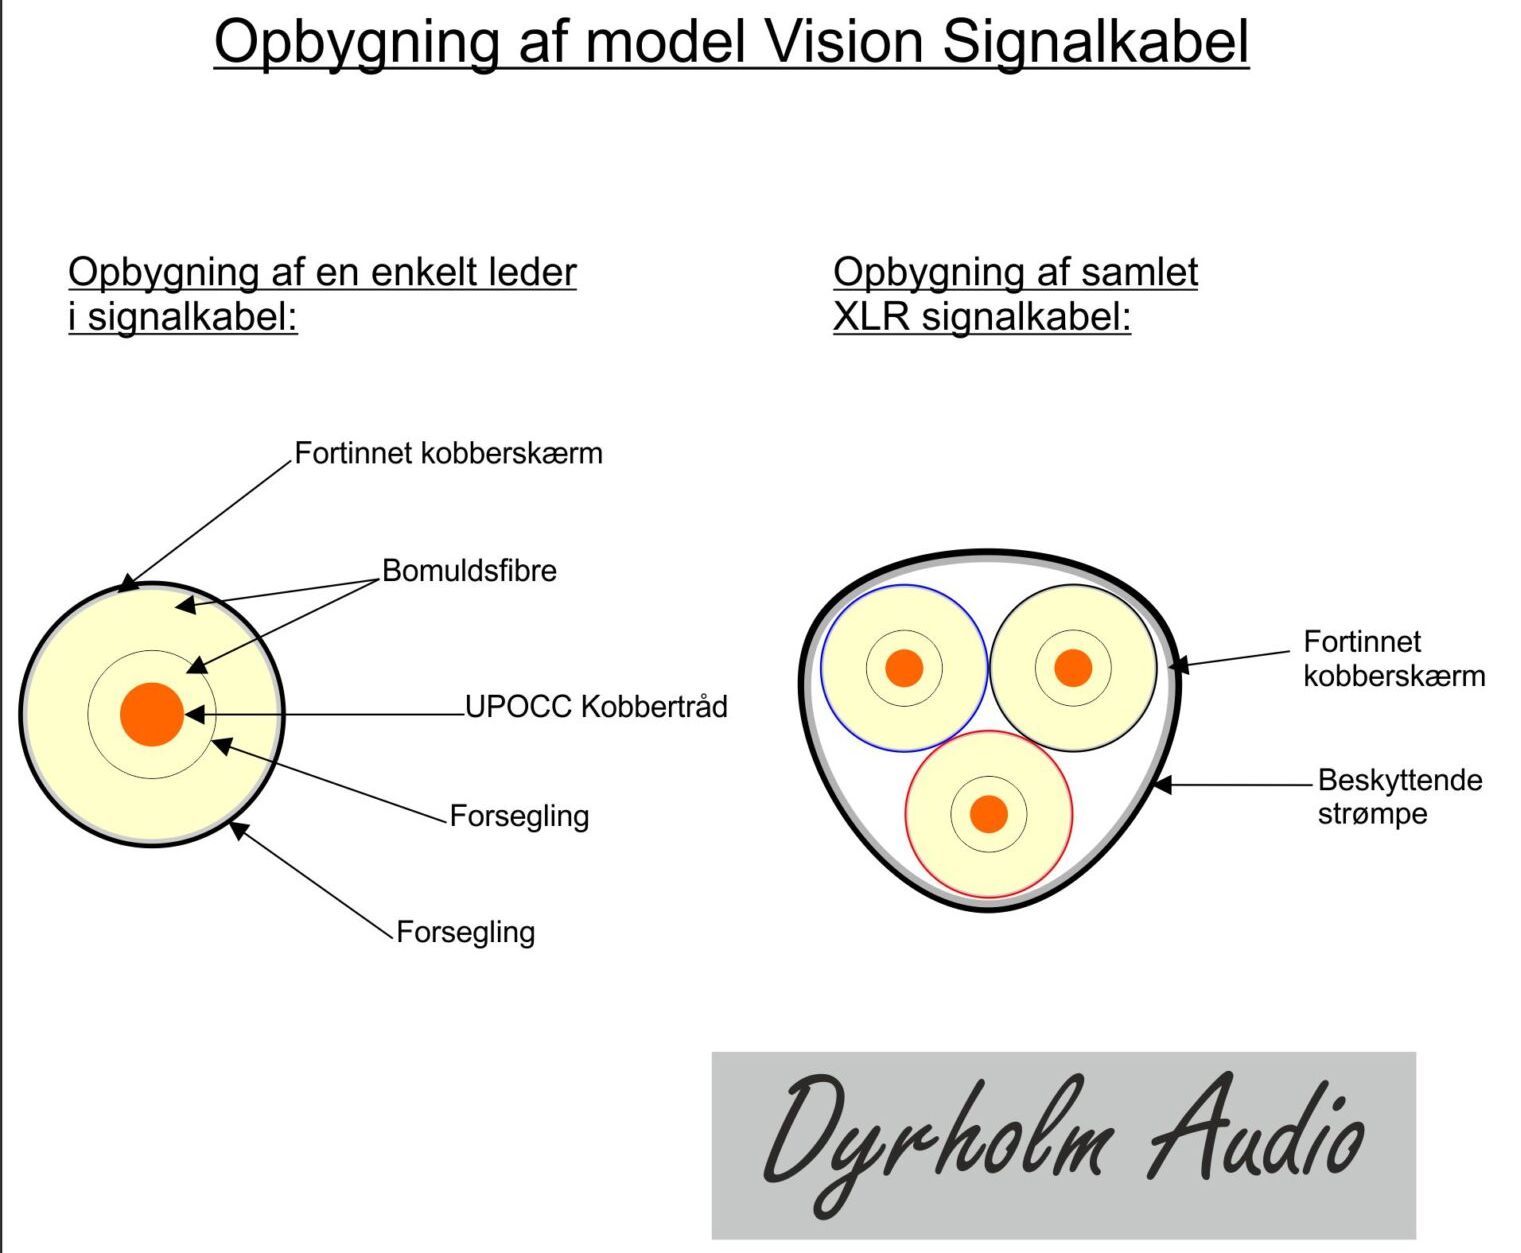 Dyrholm Vision tagning